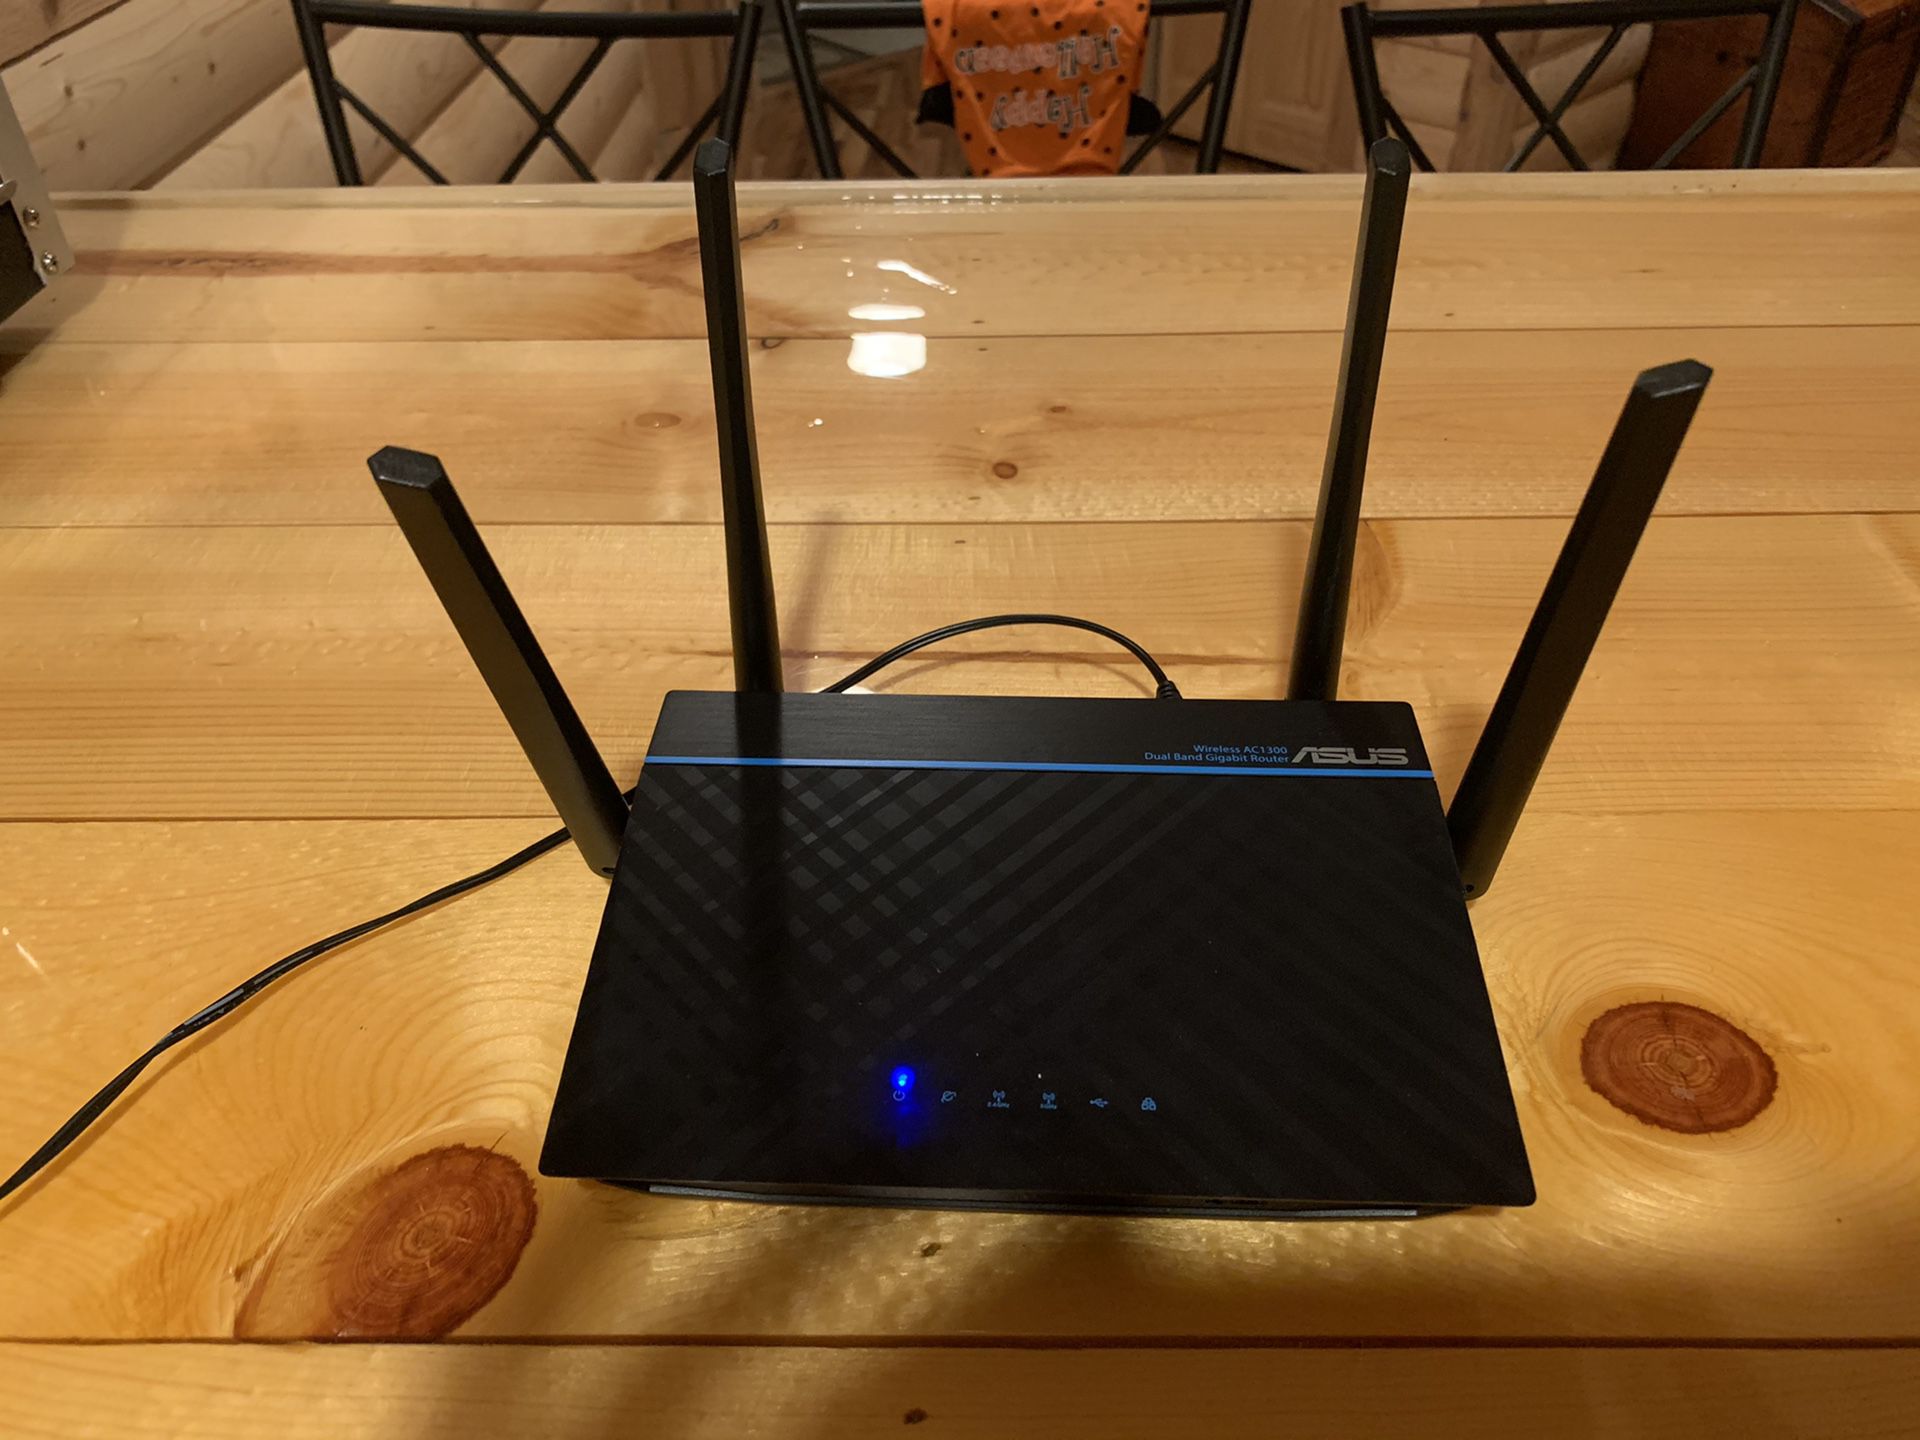 Asus Wireless Gigabit Router